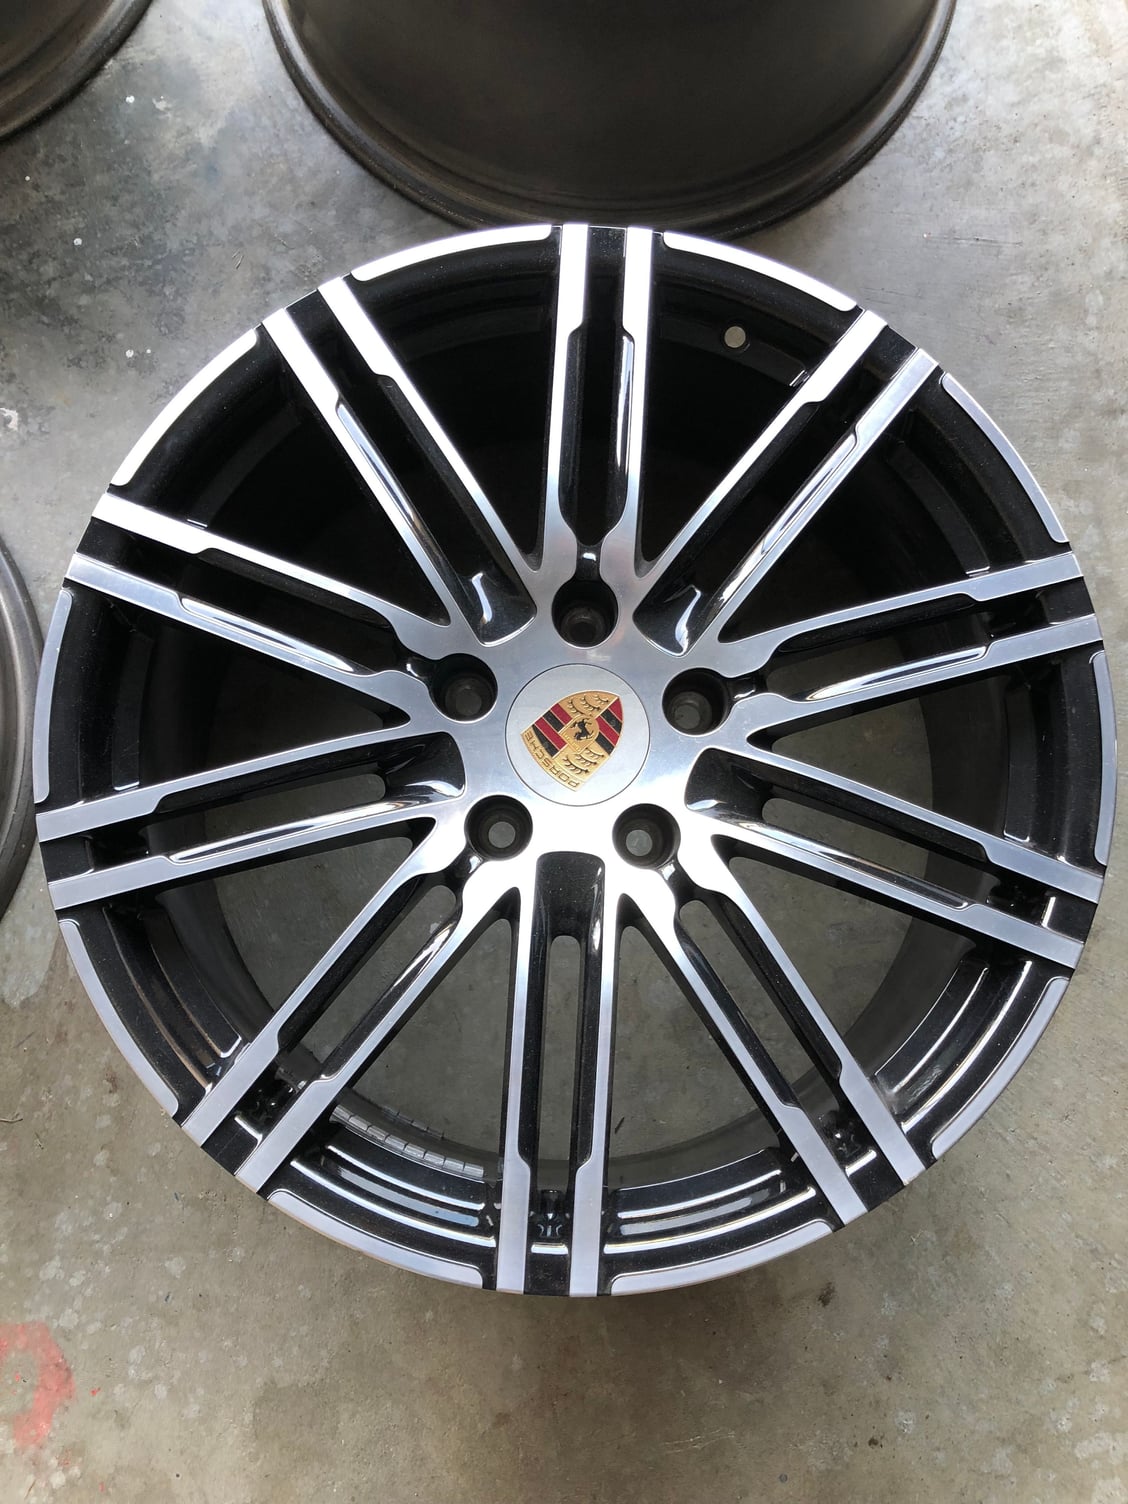 Wheels and Tires/Axles - 20" Porsche 911 OEM Turbo Forged Wheels (5 lug, 10 spokes) - Used - San Jose, CA 95129, United States